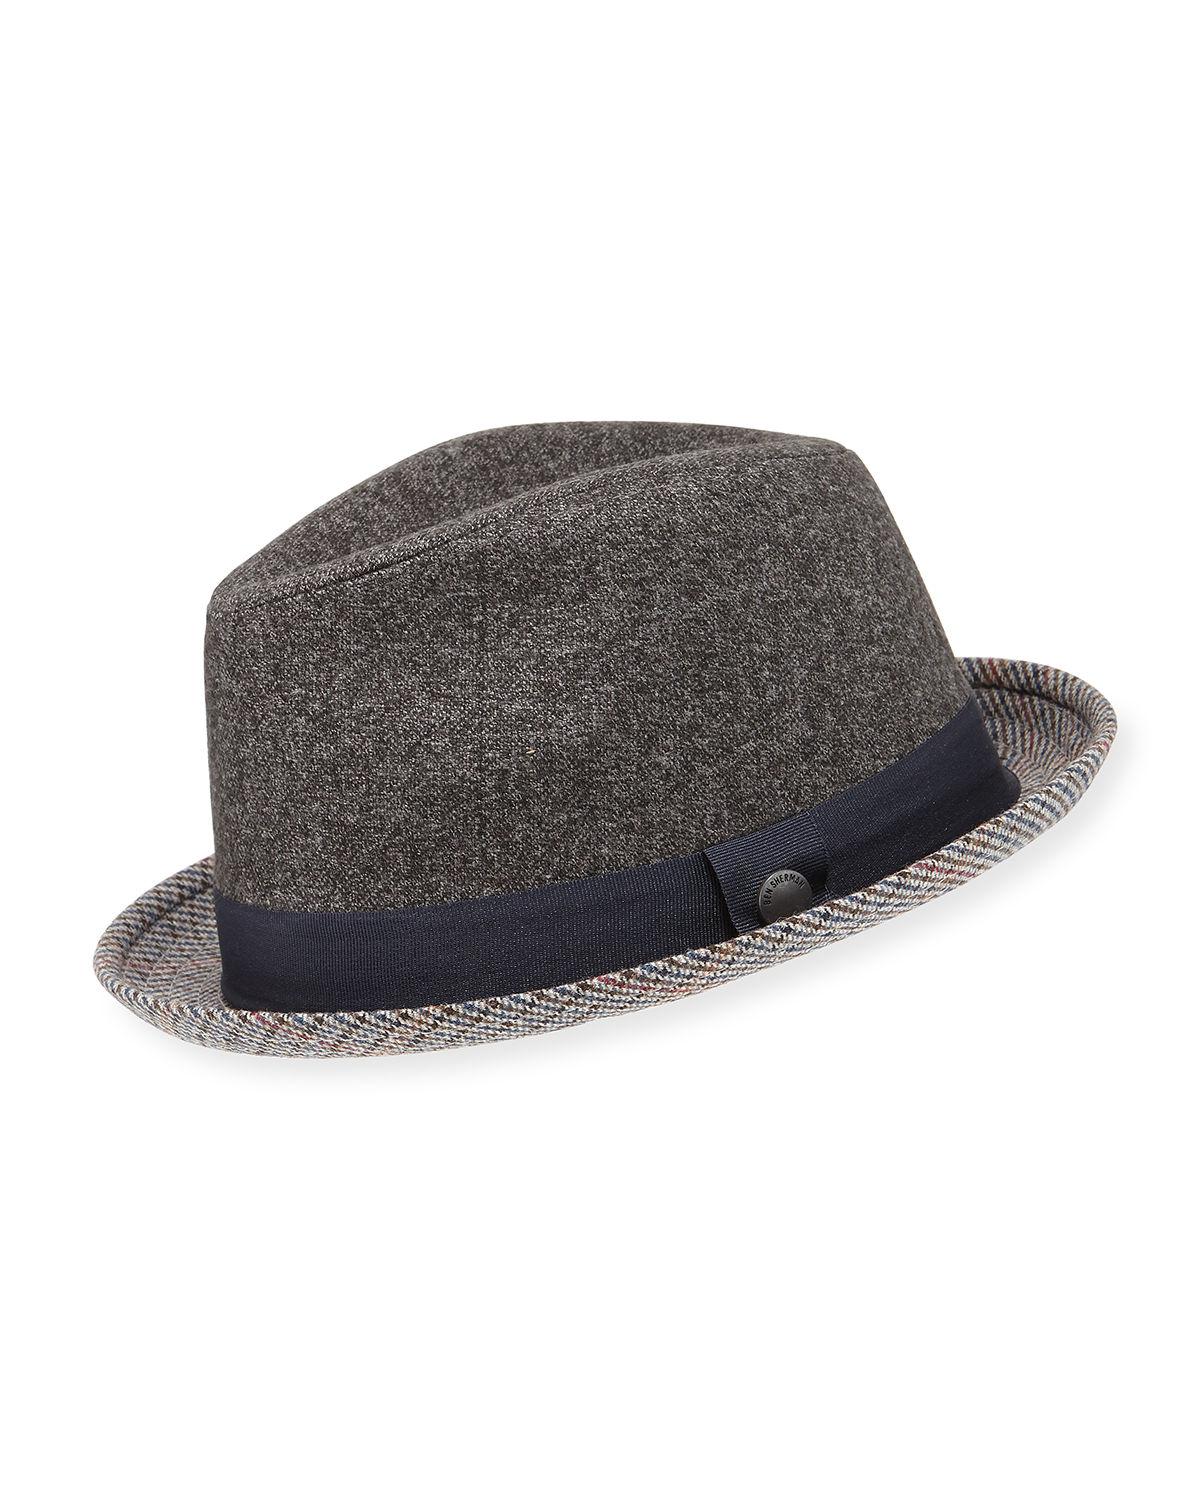 Ben Sherman Wool-blend Trilby Hat in Black for Men - Lyst